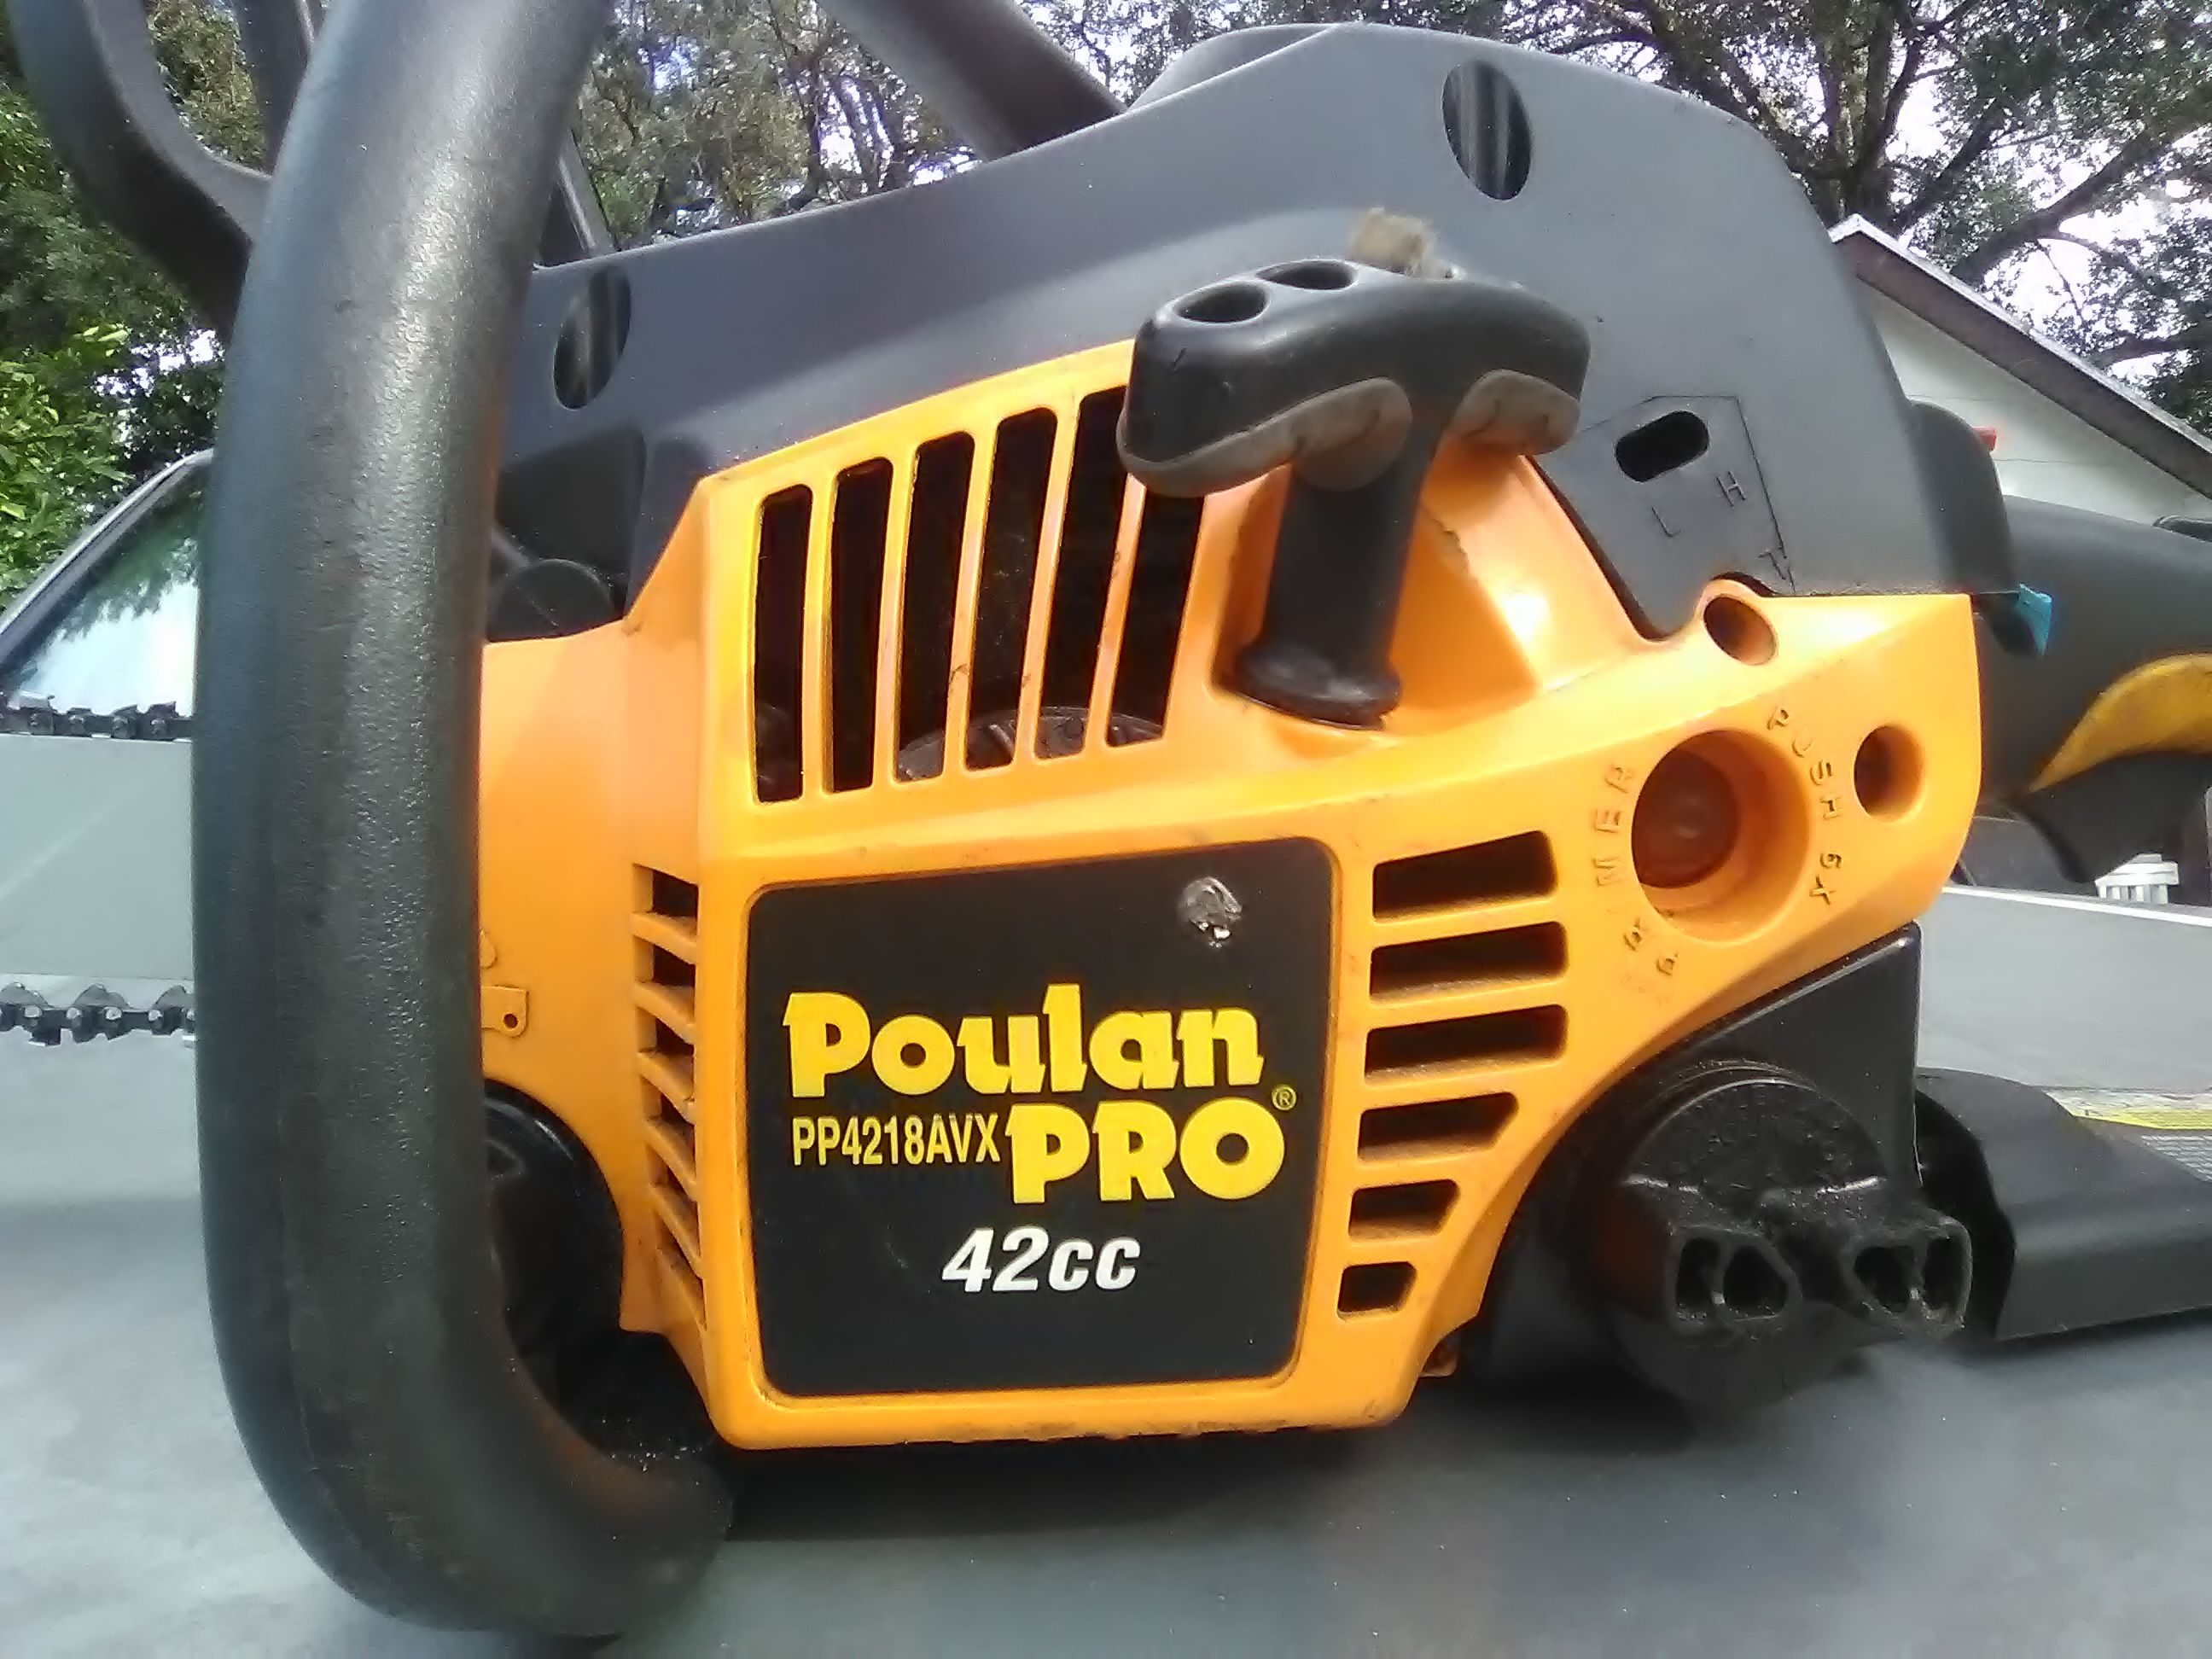 Poulan pro pp4218avx 42cc chainsaw